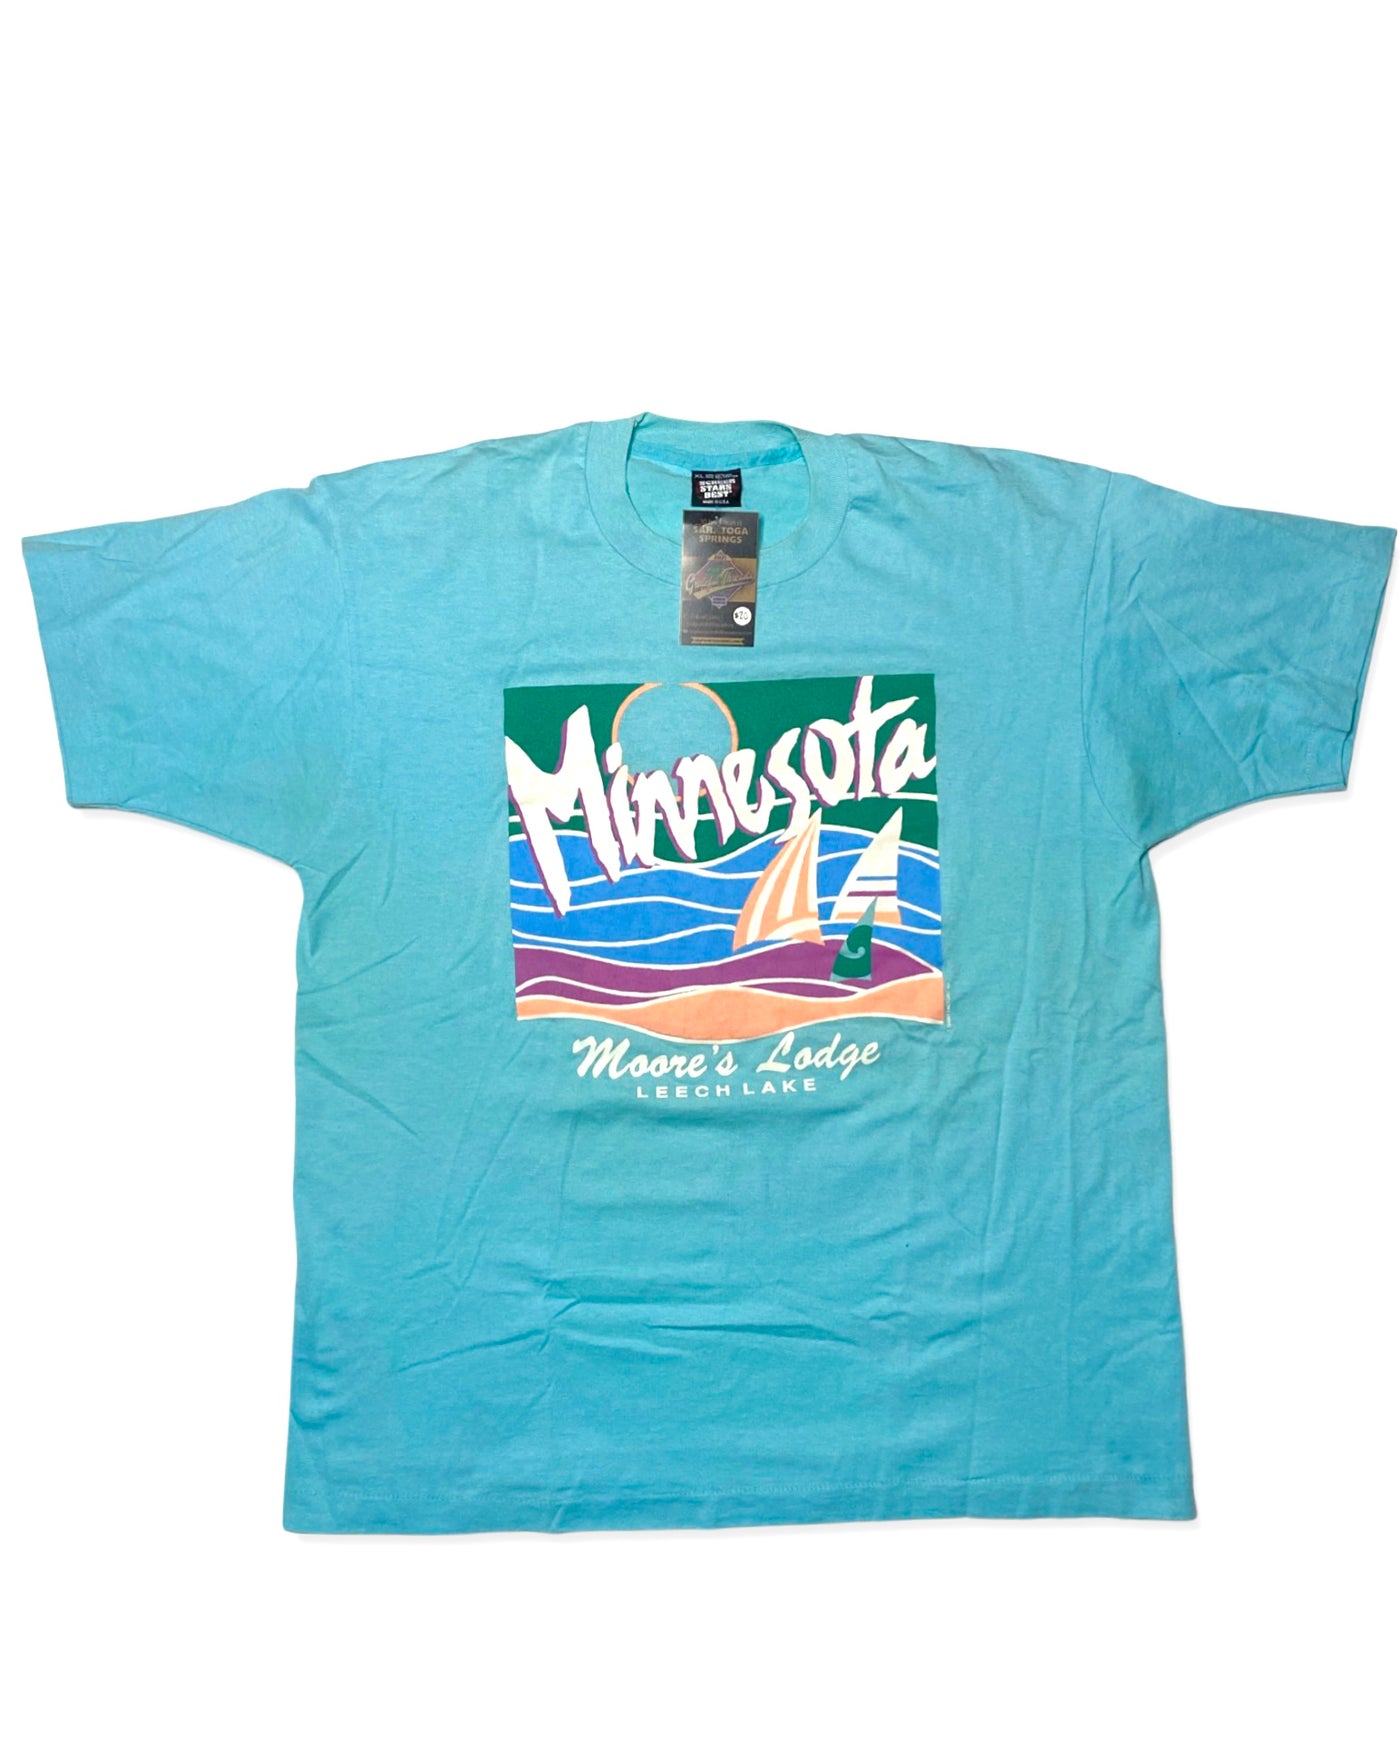 Vintage 1993 Minnesota T-Shirt